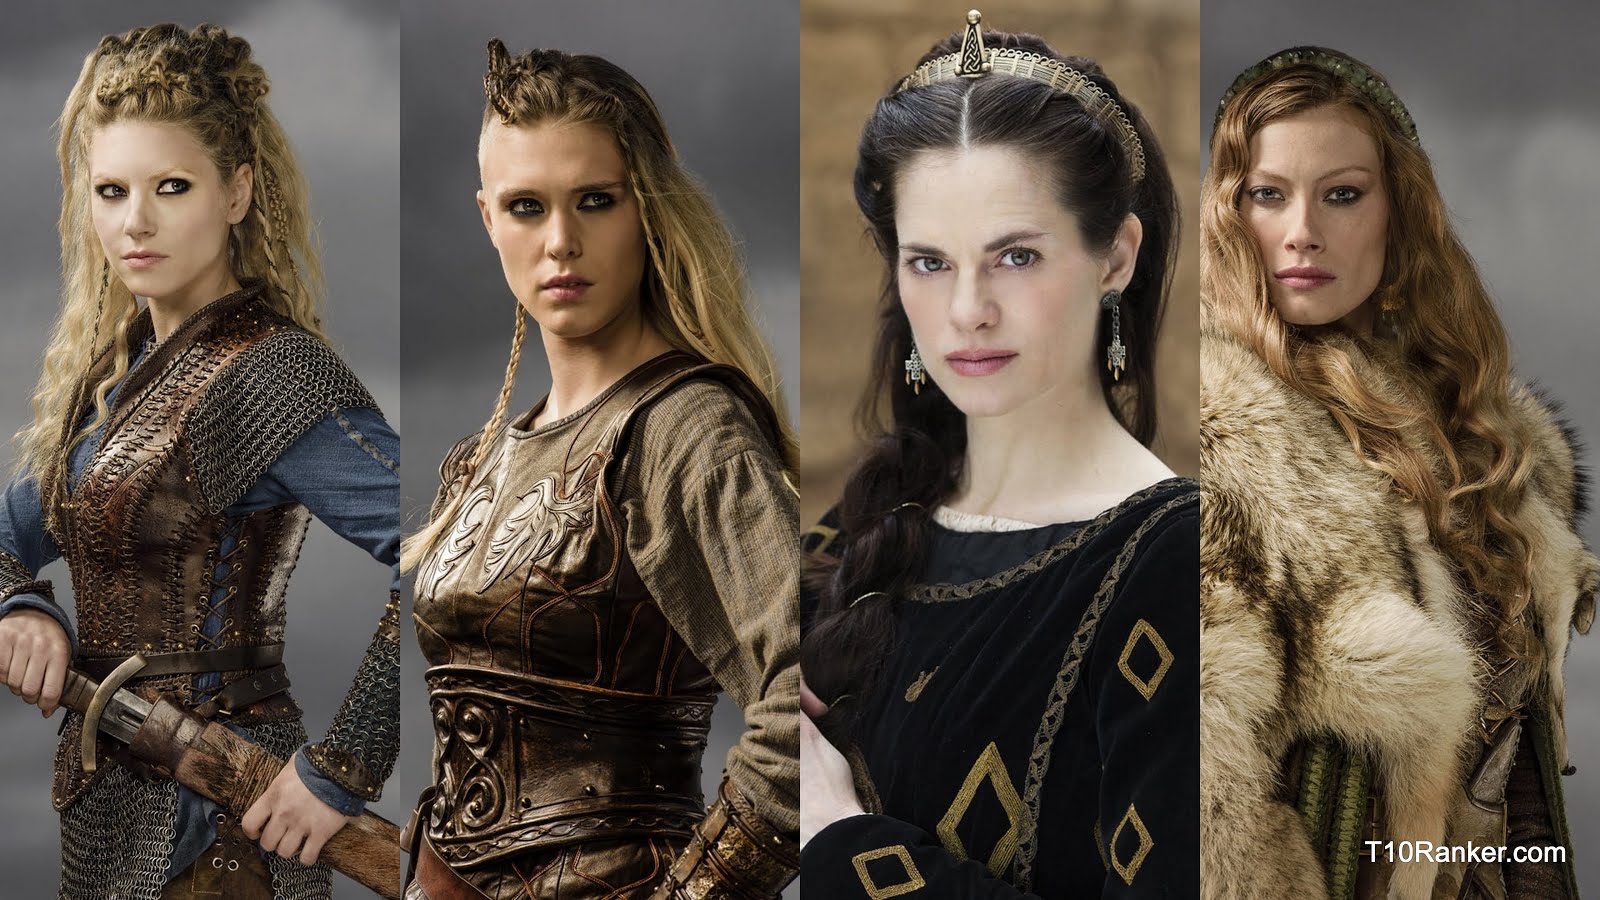 Top 10 "Vikings" Most Hottest Women | Beautiful & Sexiest ...